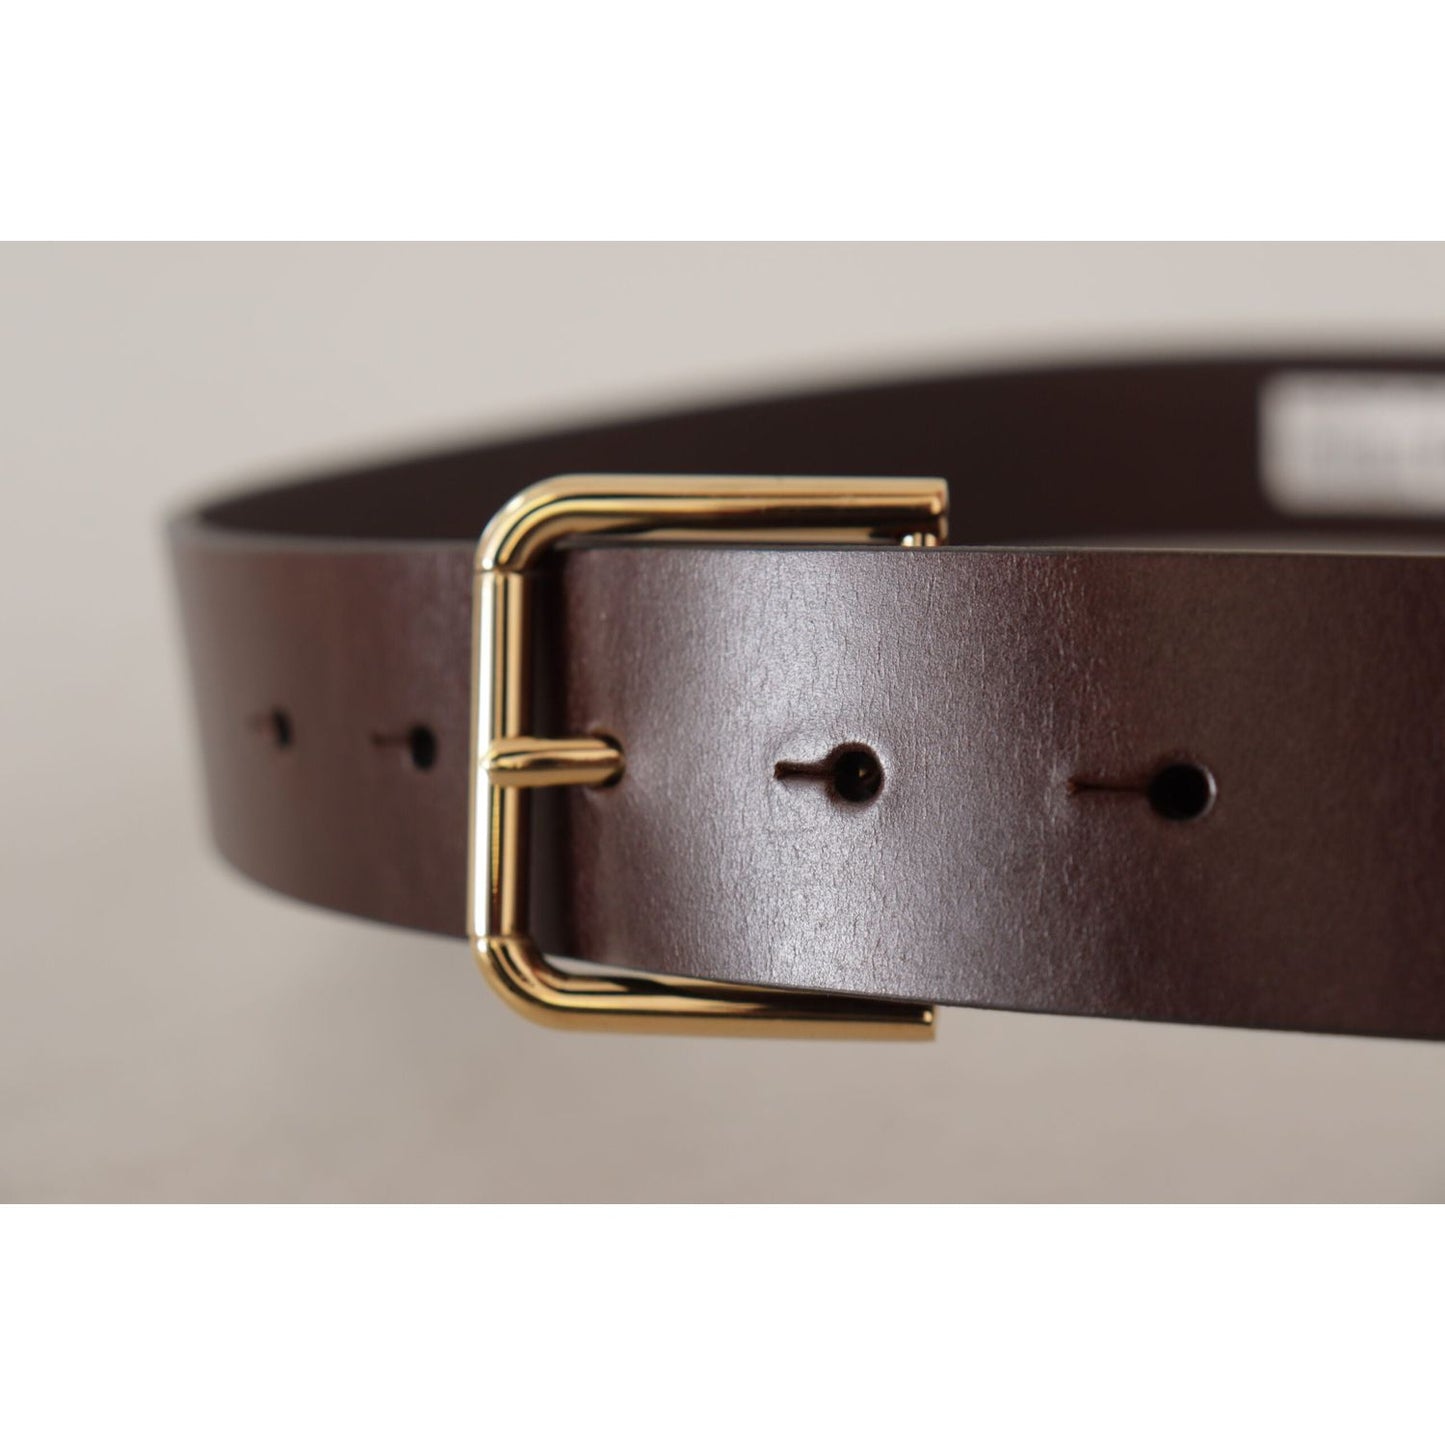 Dolce & Gabbana Elegant Dark Brown Leather Belt brown-plain-calf-leather-gold-tone-buckle-belt